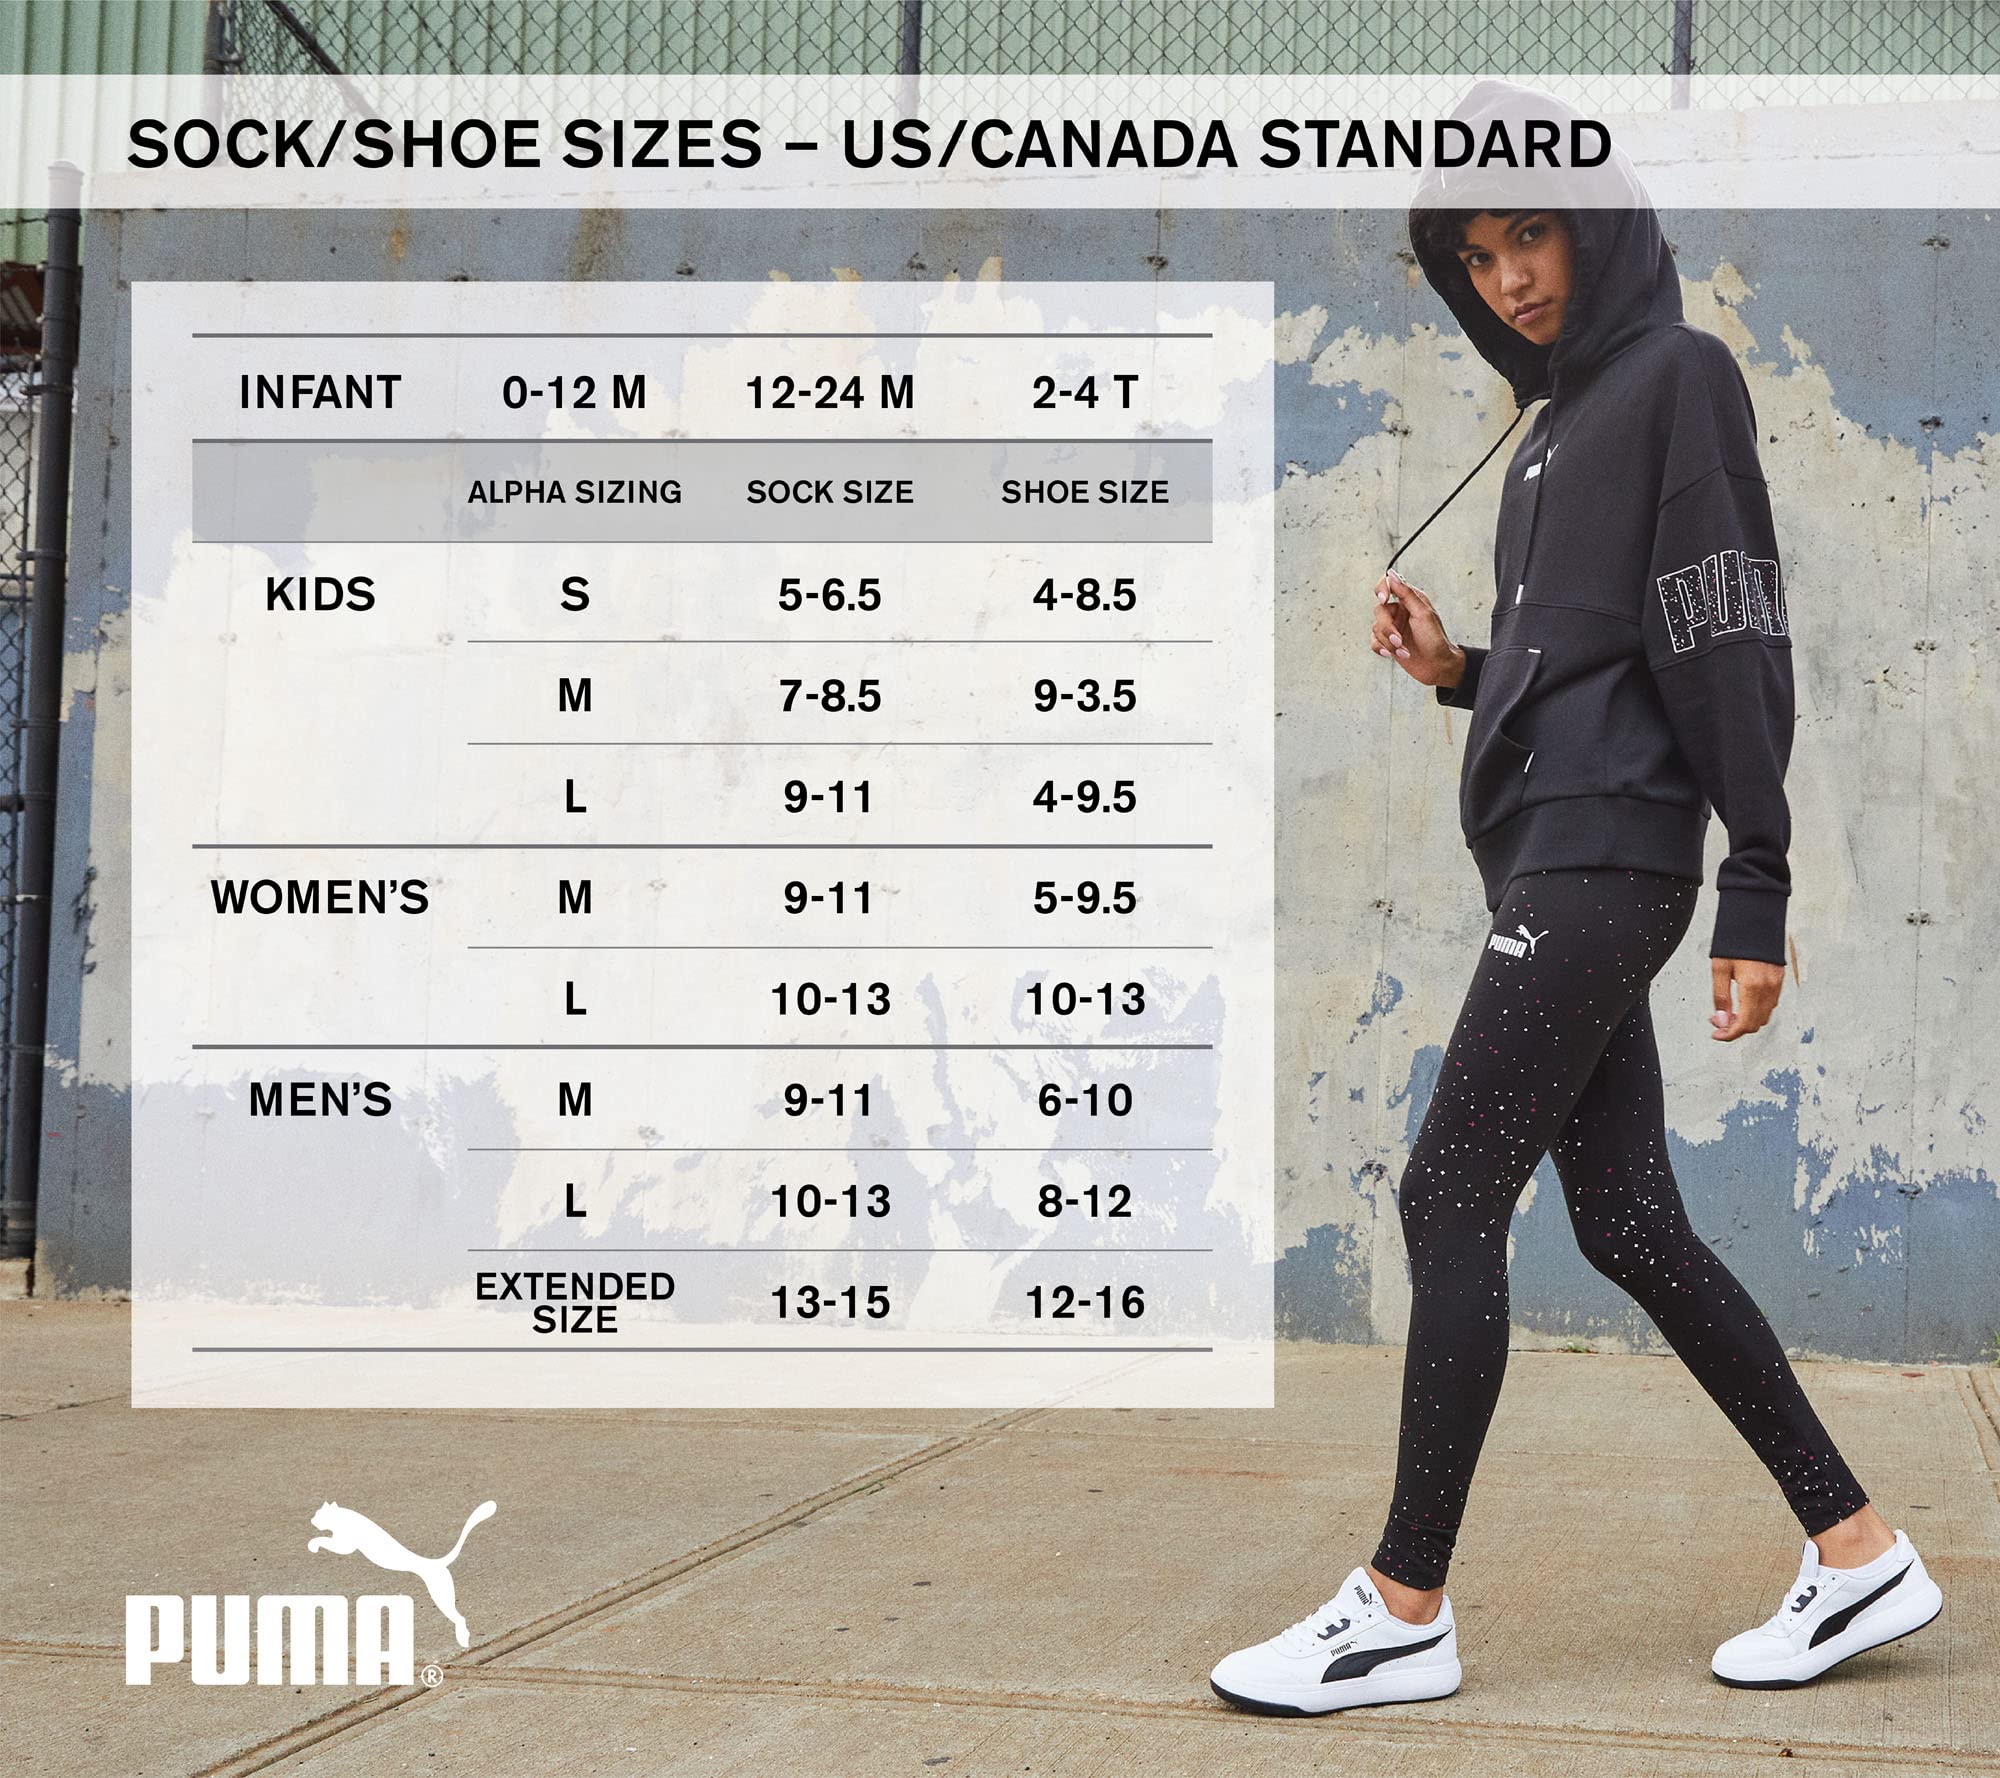 PUMA mens 8 Pack Low Cut Running Socks, White/Grey, 10 13 US